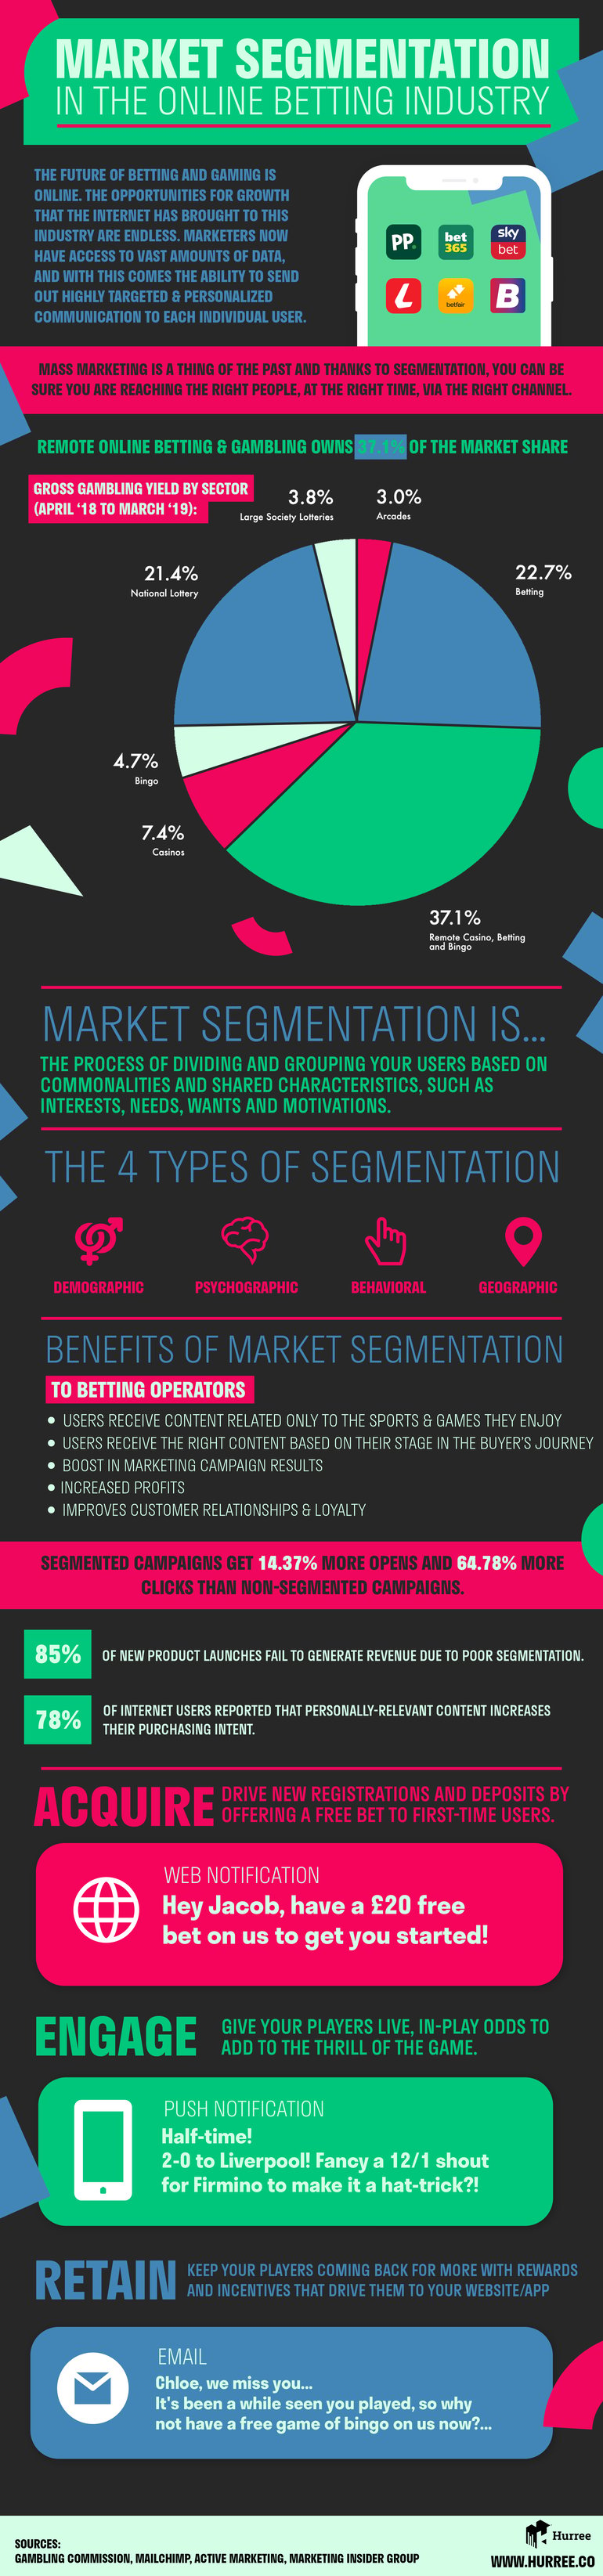 online-betting-market-segmentation-infographic